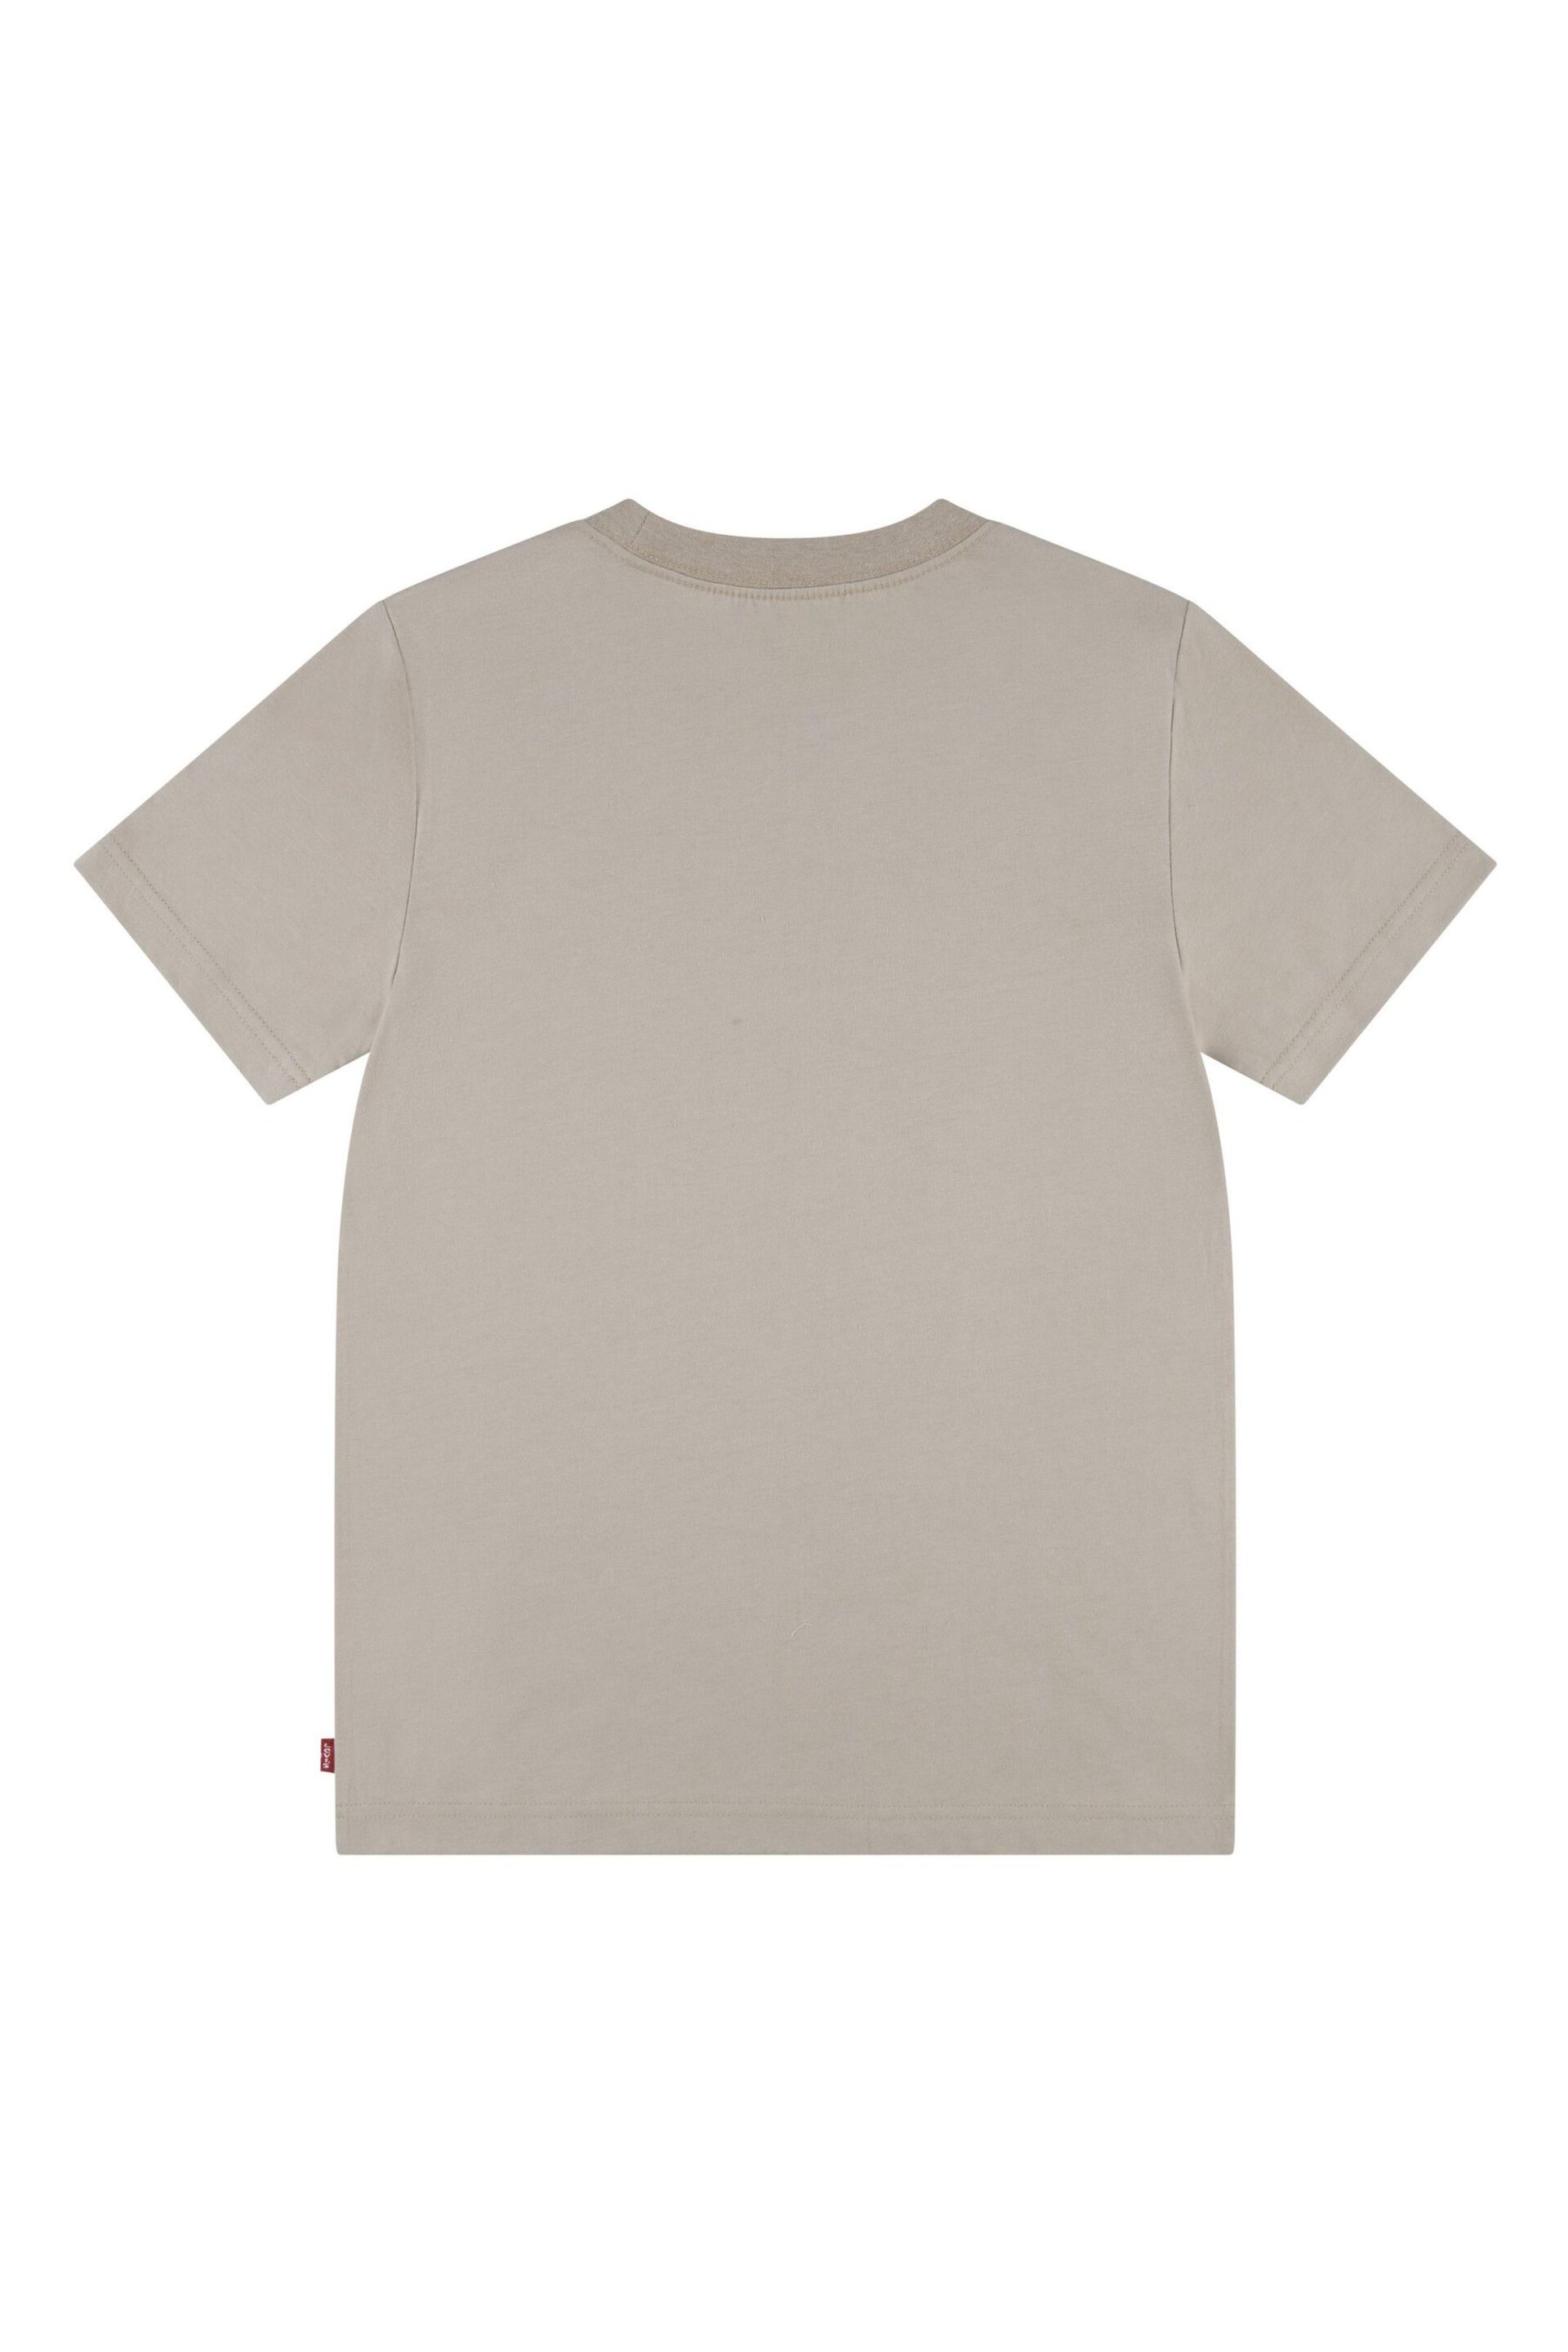 Levi's® Brown Short Sleeve Original Housemark Logo T-Shirt - Image 5 of 7